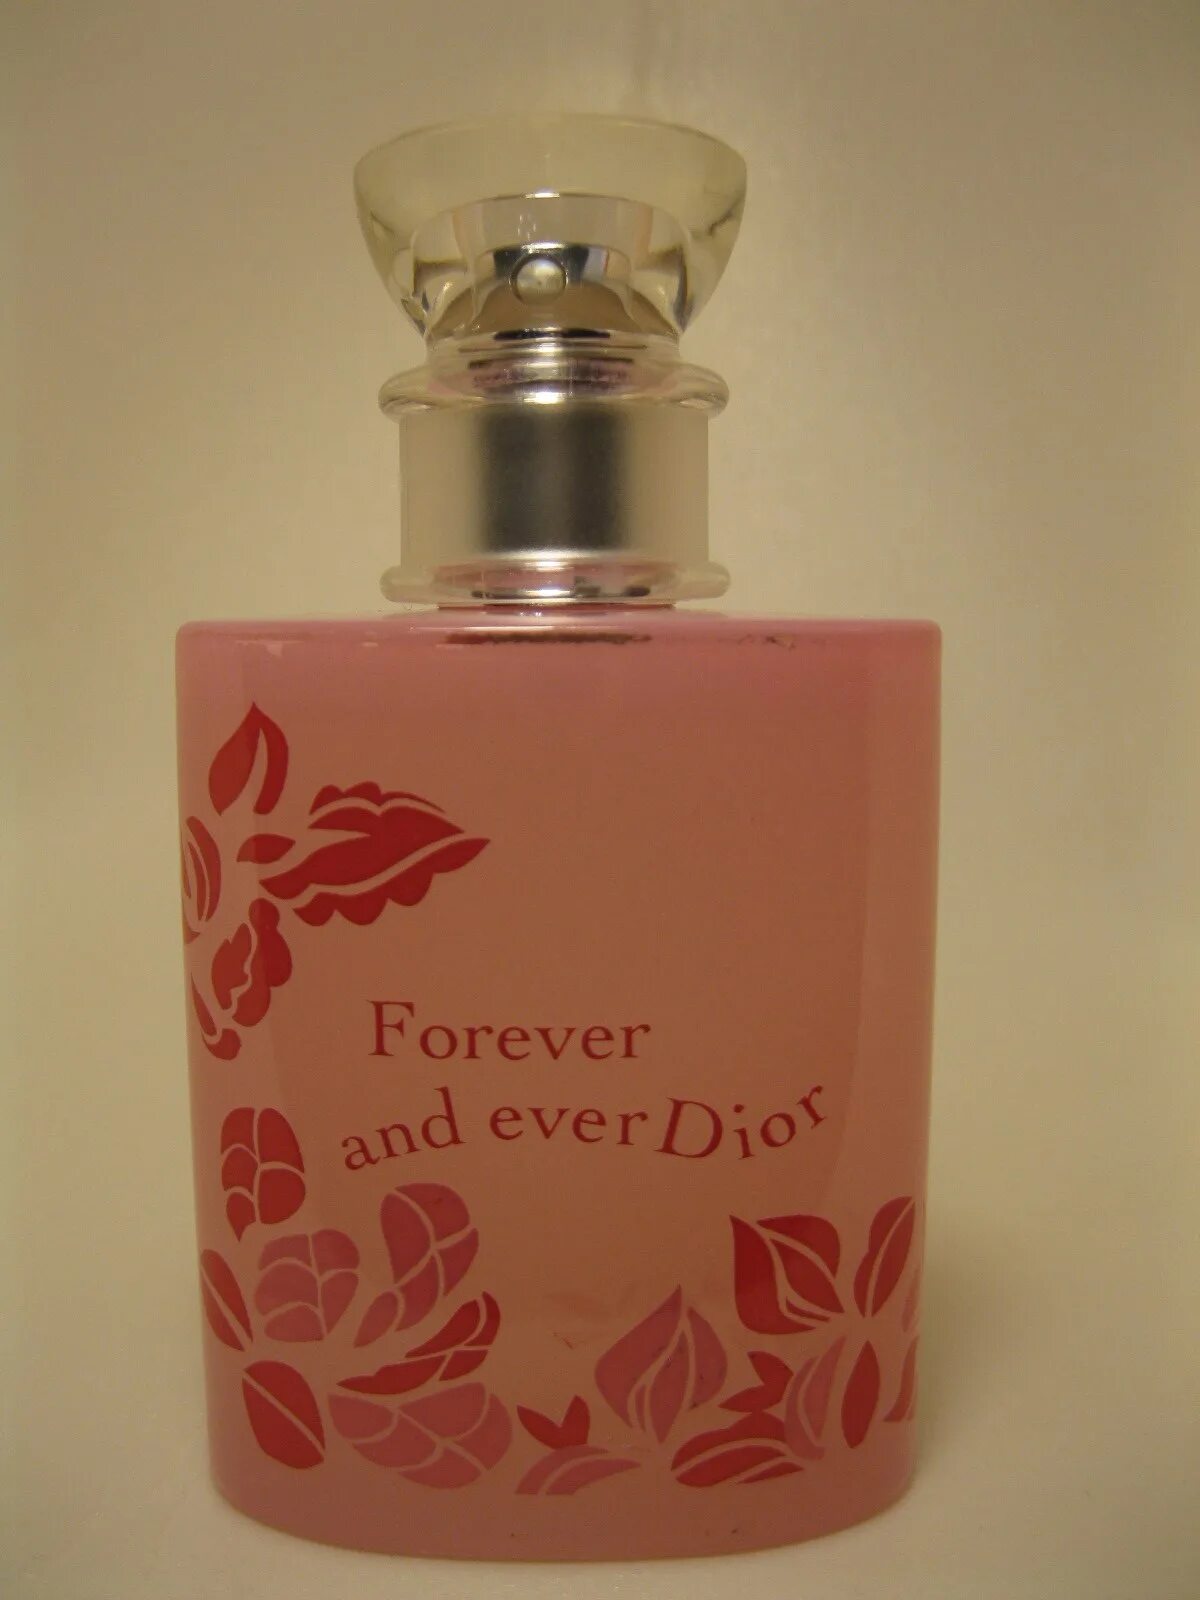 Форева энд эва. Духи Форевер энд Эвер. Кристиан диор Форевер энд Эвер. Диор Forever and ever. Dior Forever and ever Miss Dior.